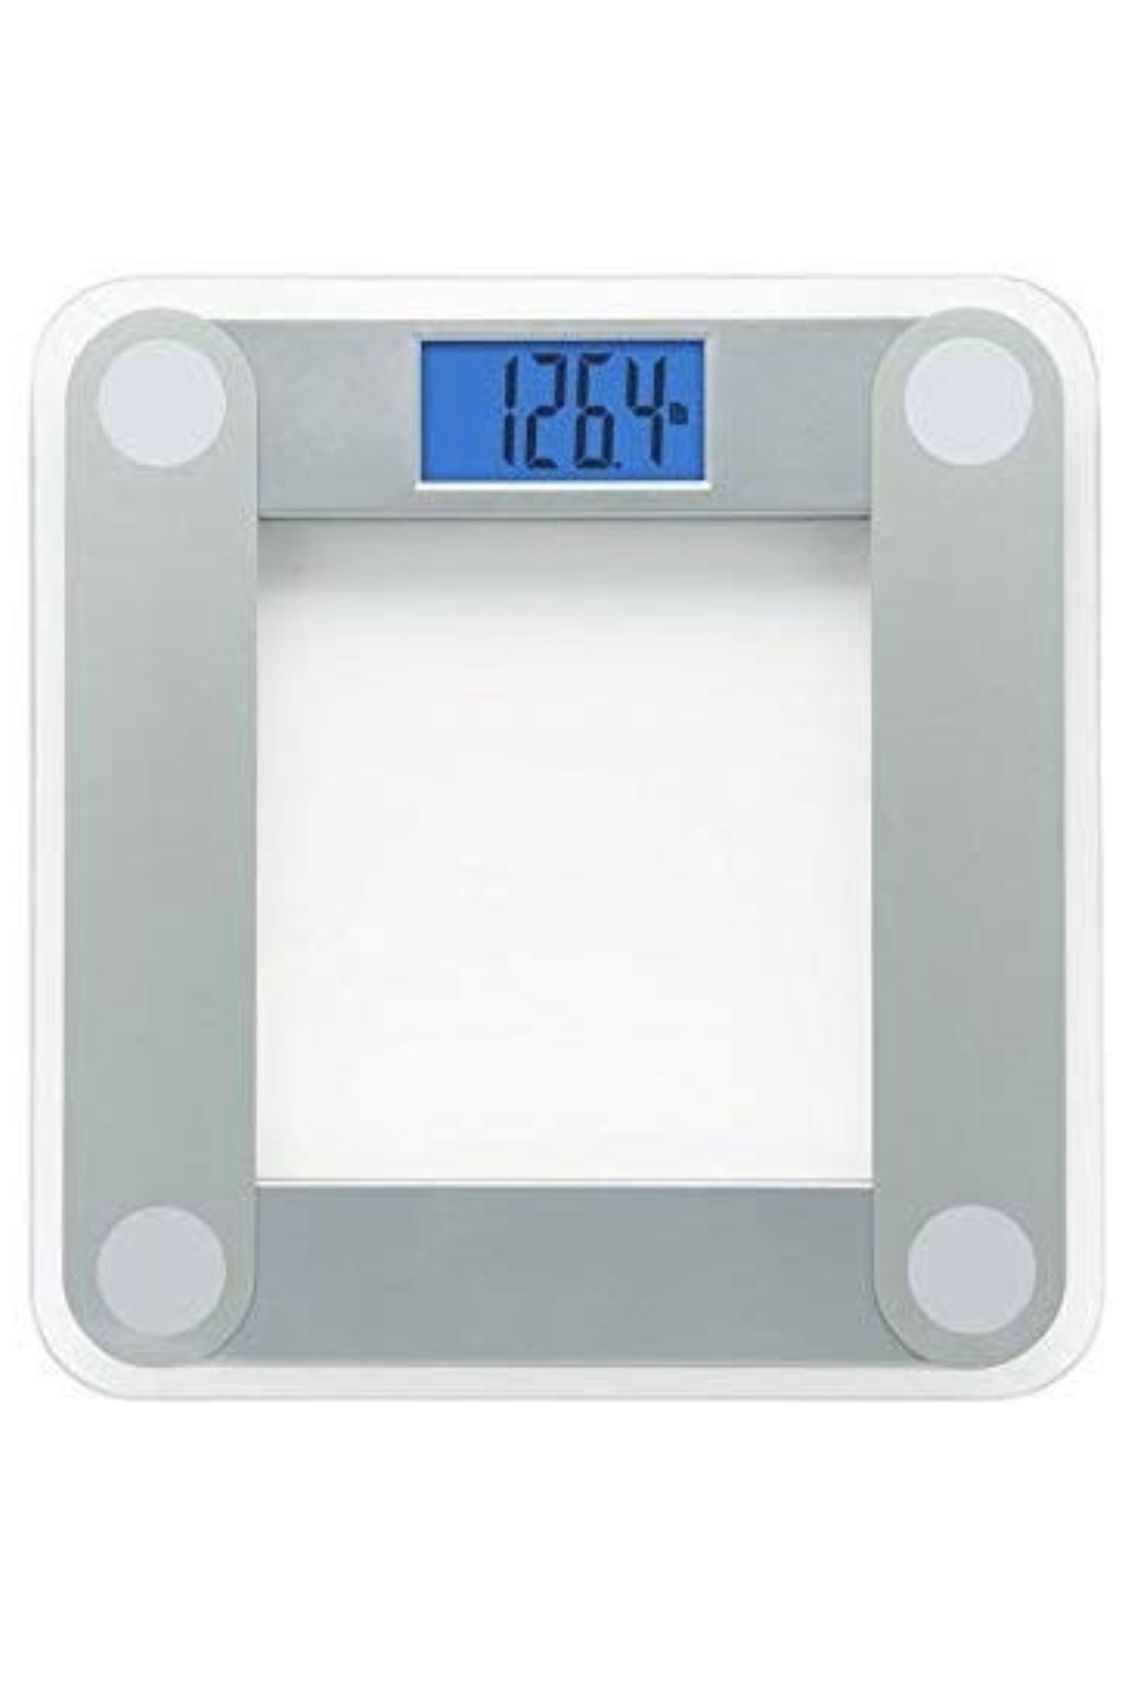 EatSmart Precision Digital Bathroom Scale (Weighing Scale/Weighing Machine)